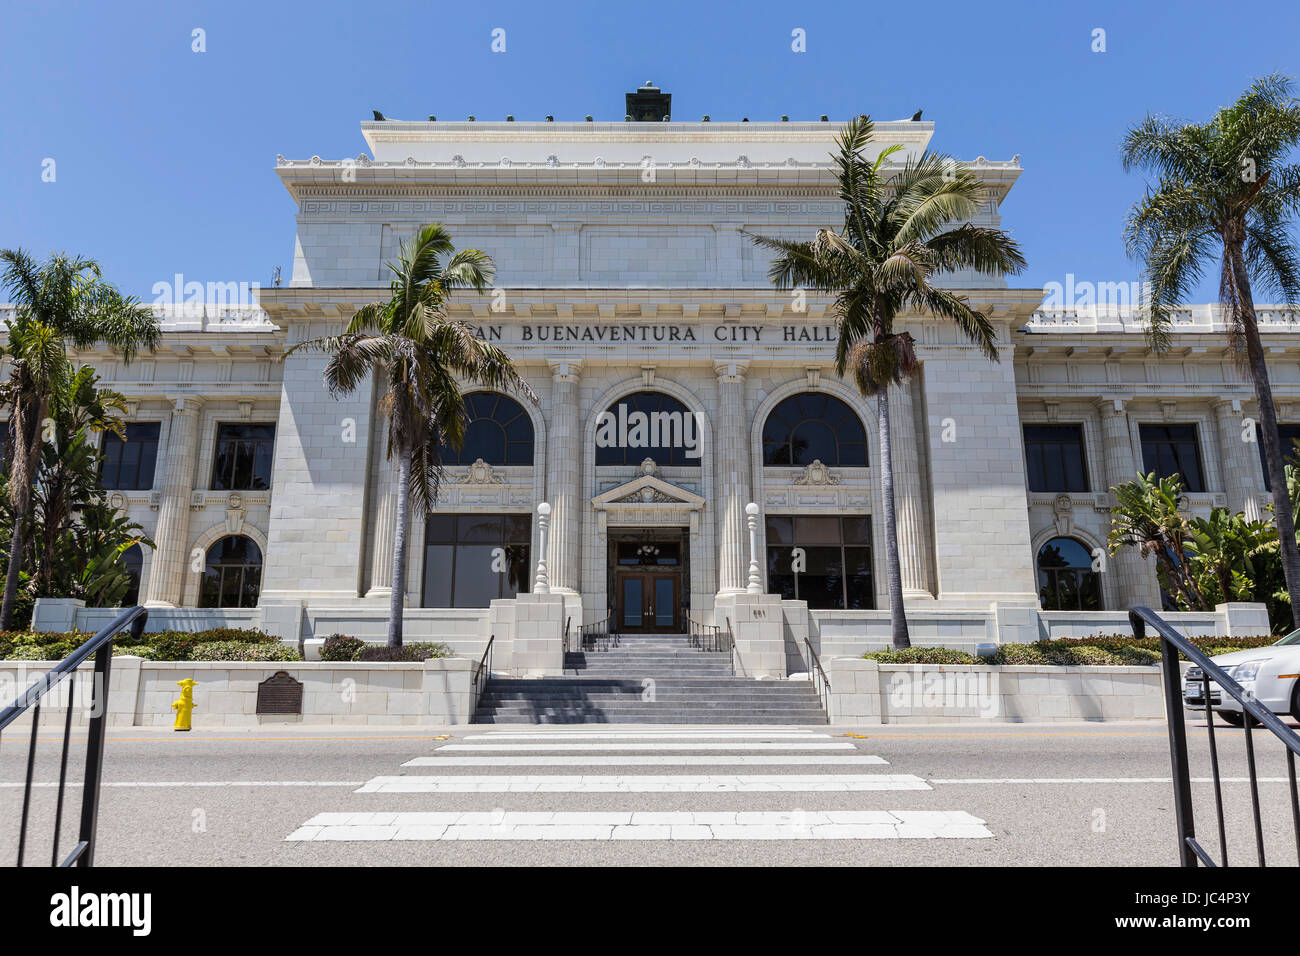 Ventura, Kalifornien, USA - 11. Juni 2017: Vordere Fassade des historischen Ventura Rathauses Gebäude in Südkalifornien. Stockfoto